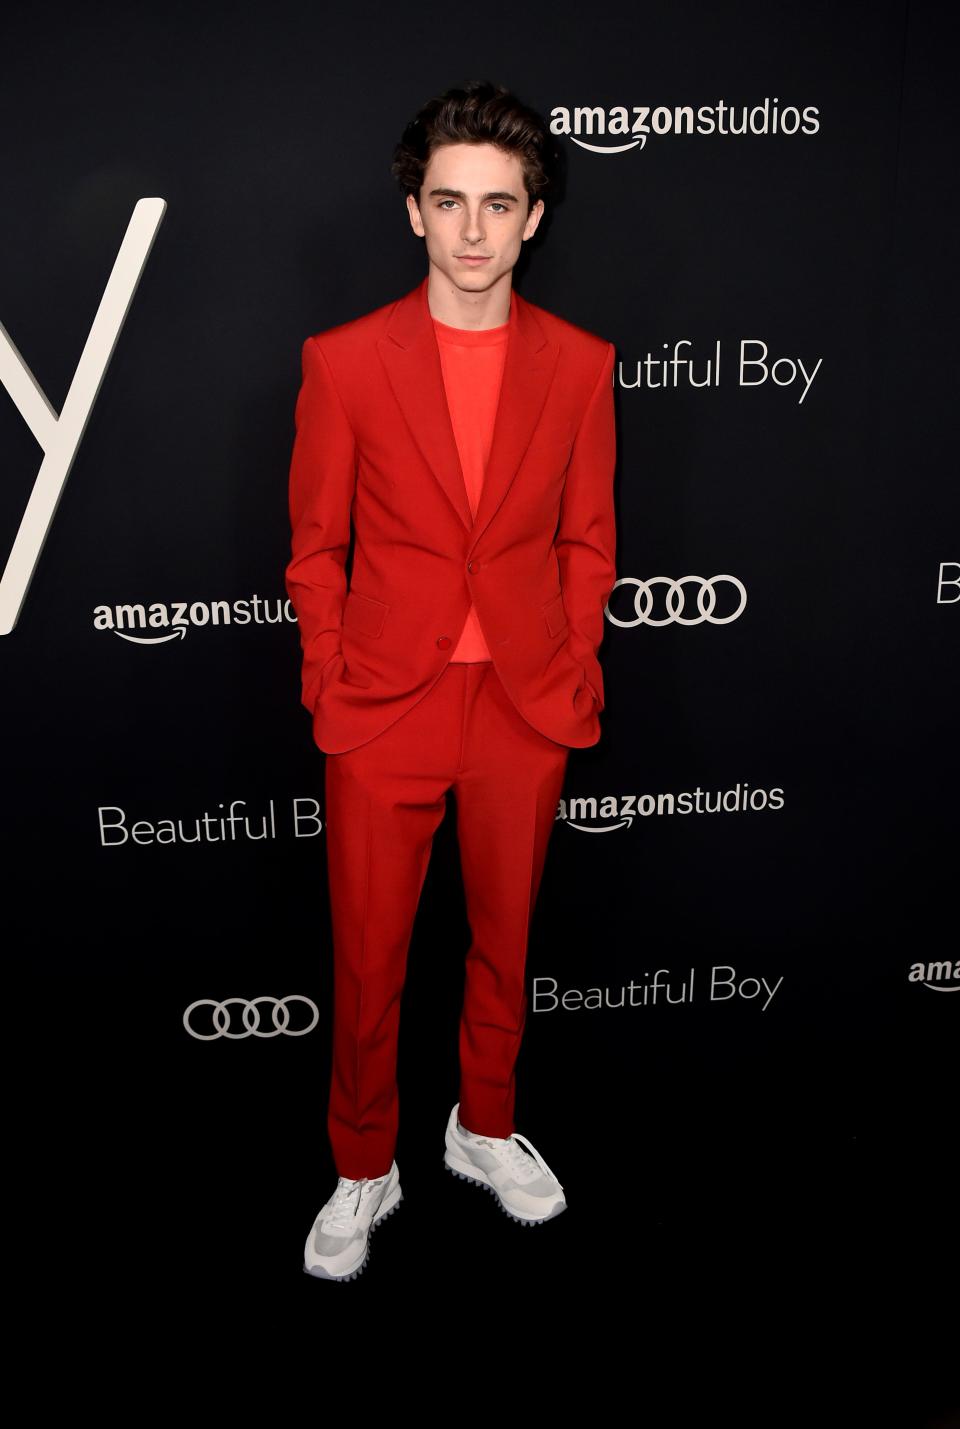 Timothée Chalamet attends the Amazon Studios of Angeles premiere of "Beautiful Boy"